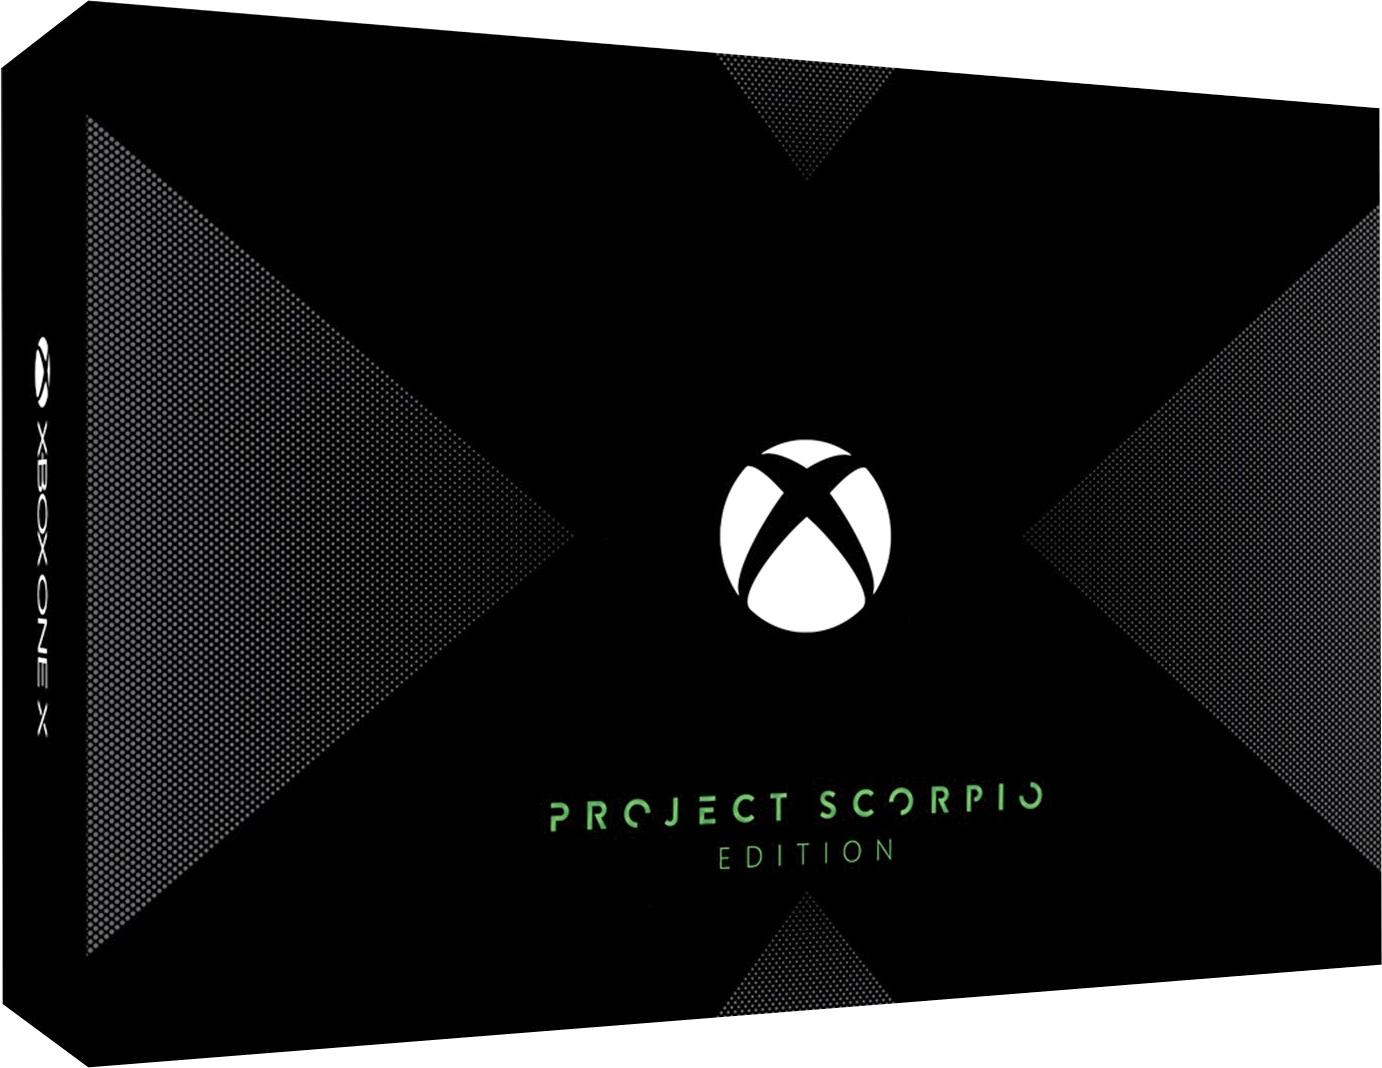 project-scorpio-edition-xb1x-box-art.jpg